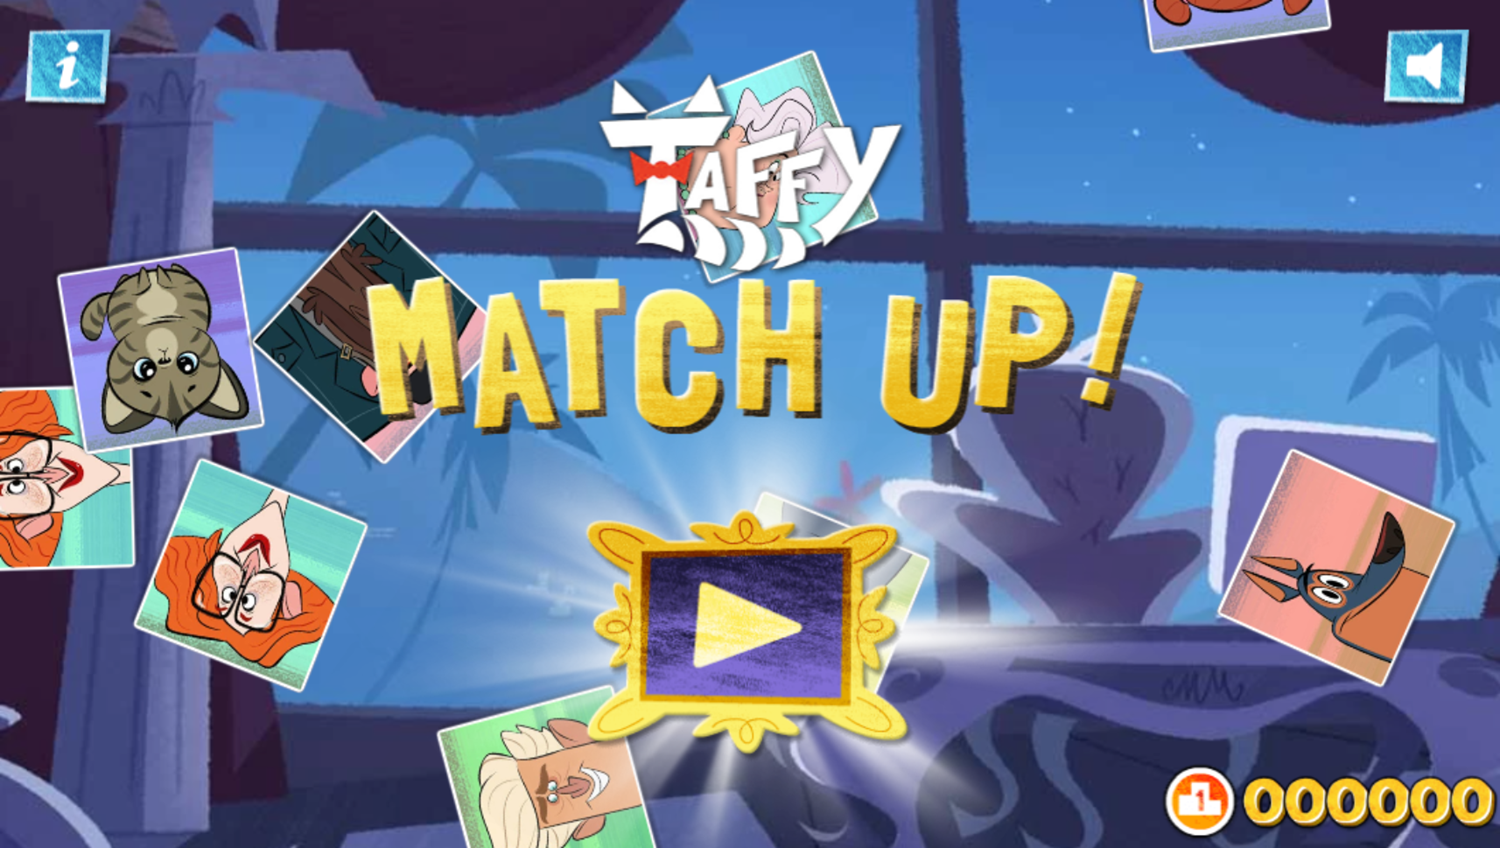 Taffy Match Up Game Welcome Screen Screenshot.